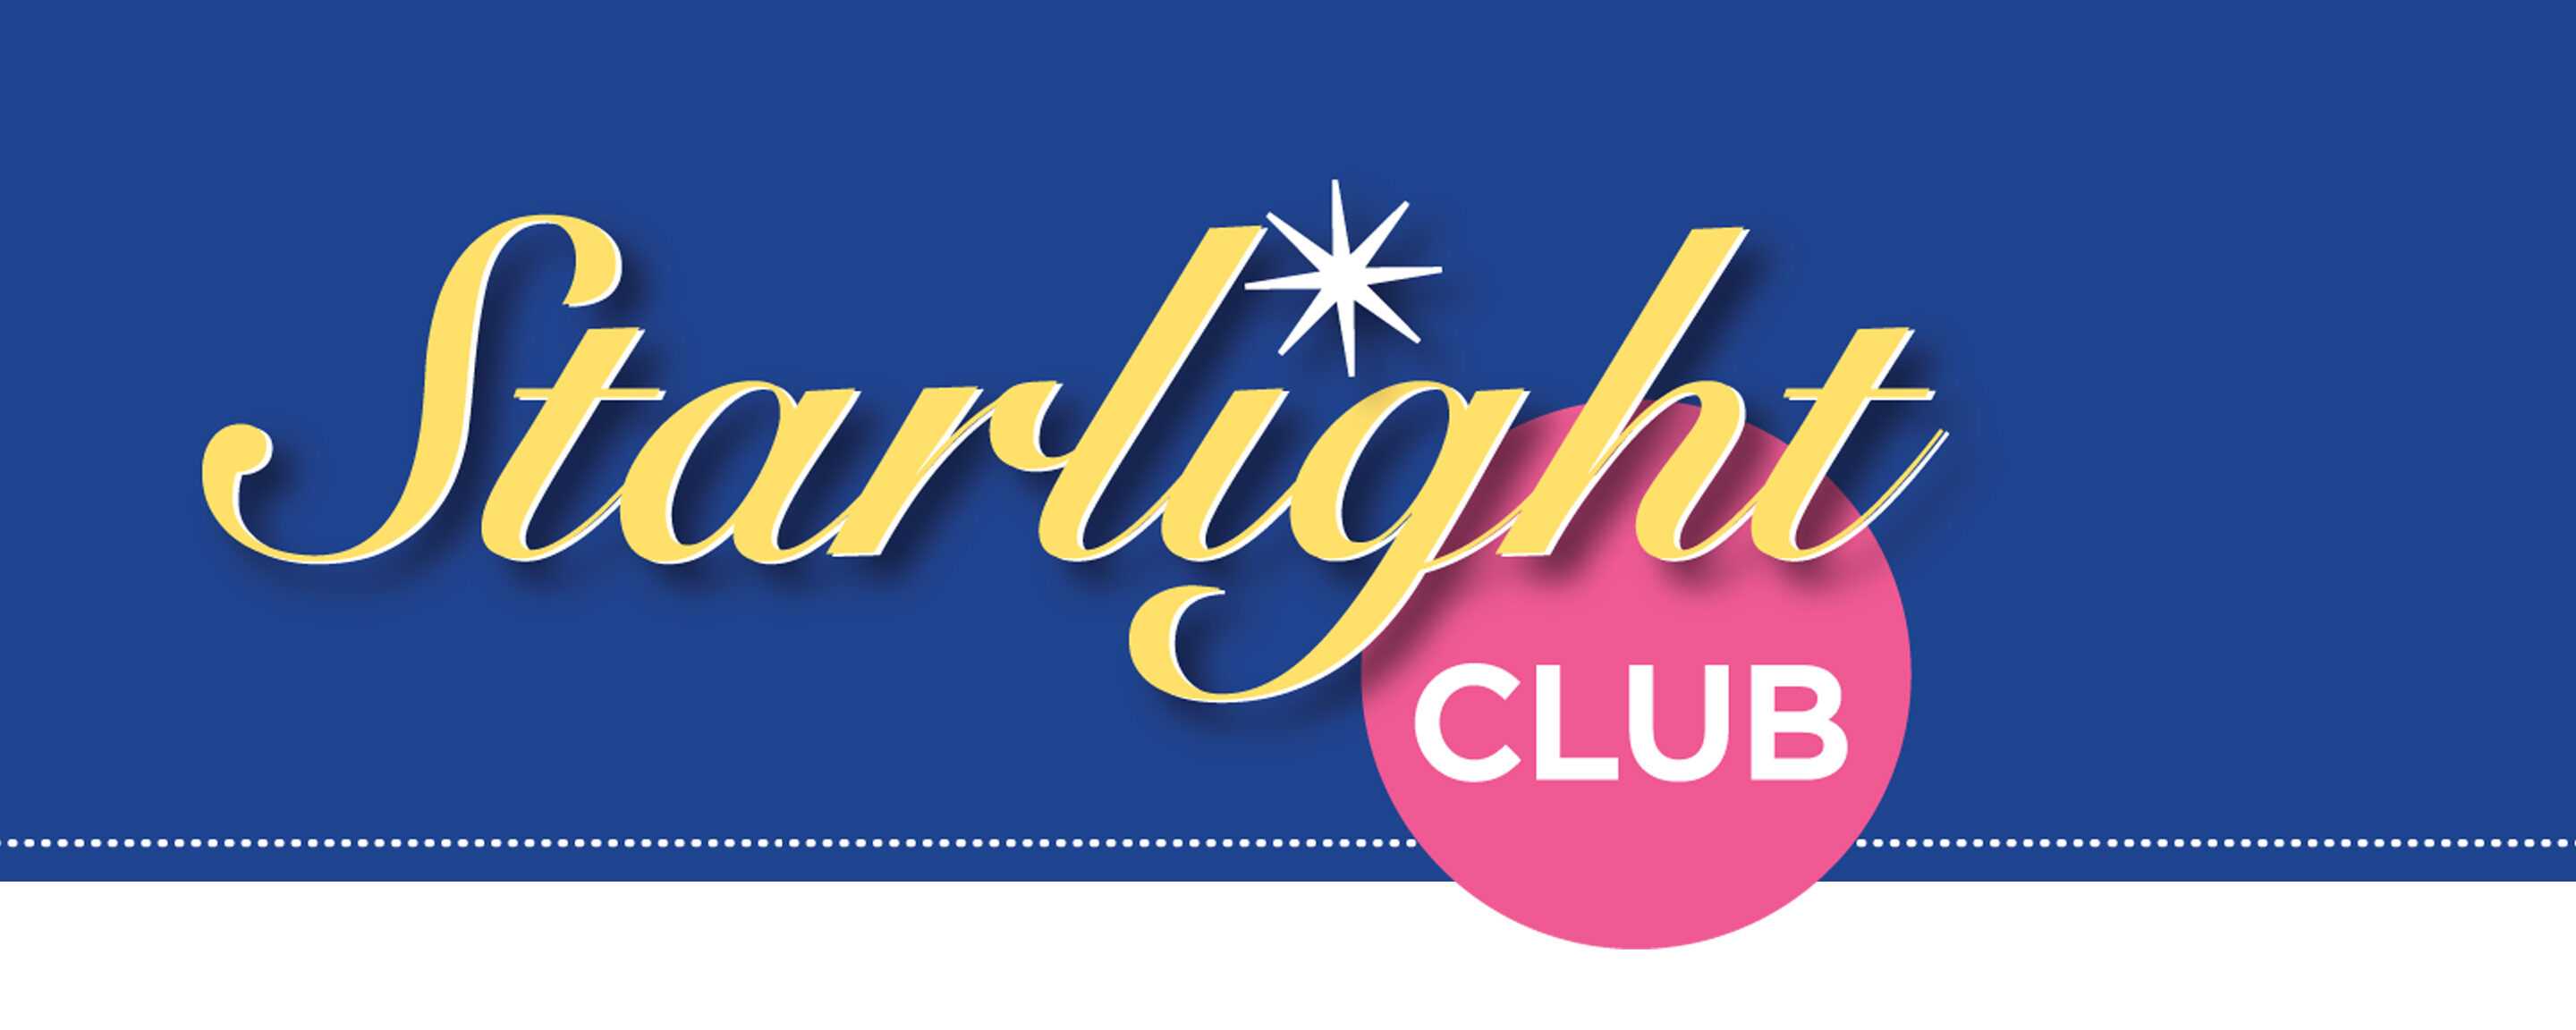 Marian Middle School Starlight Club